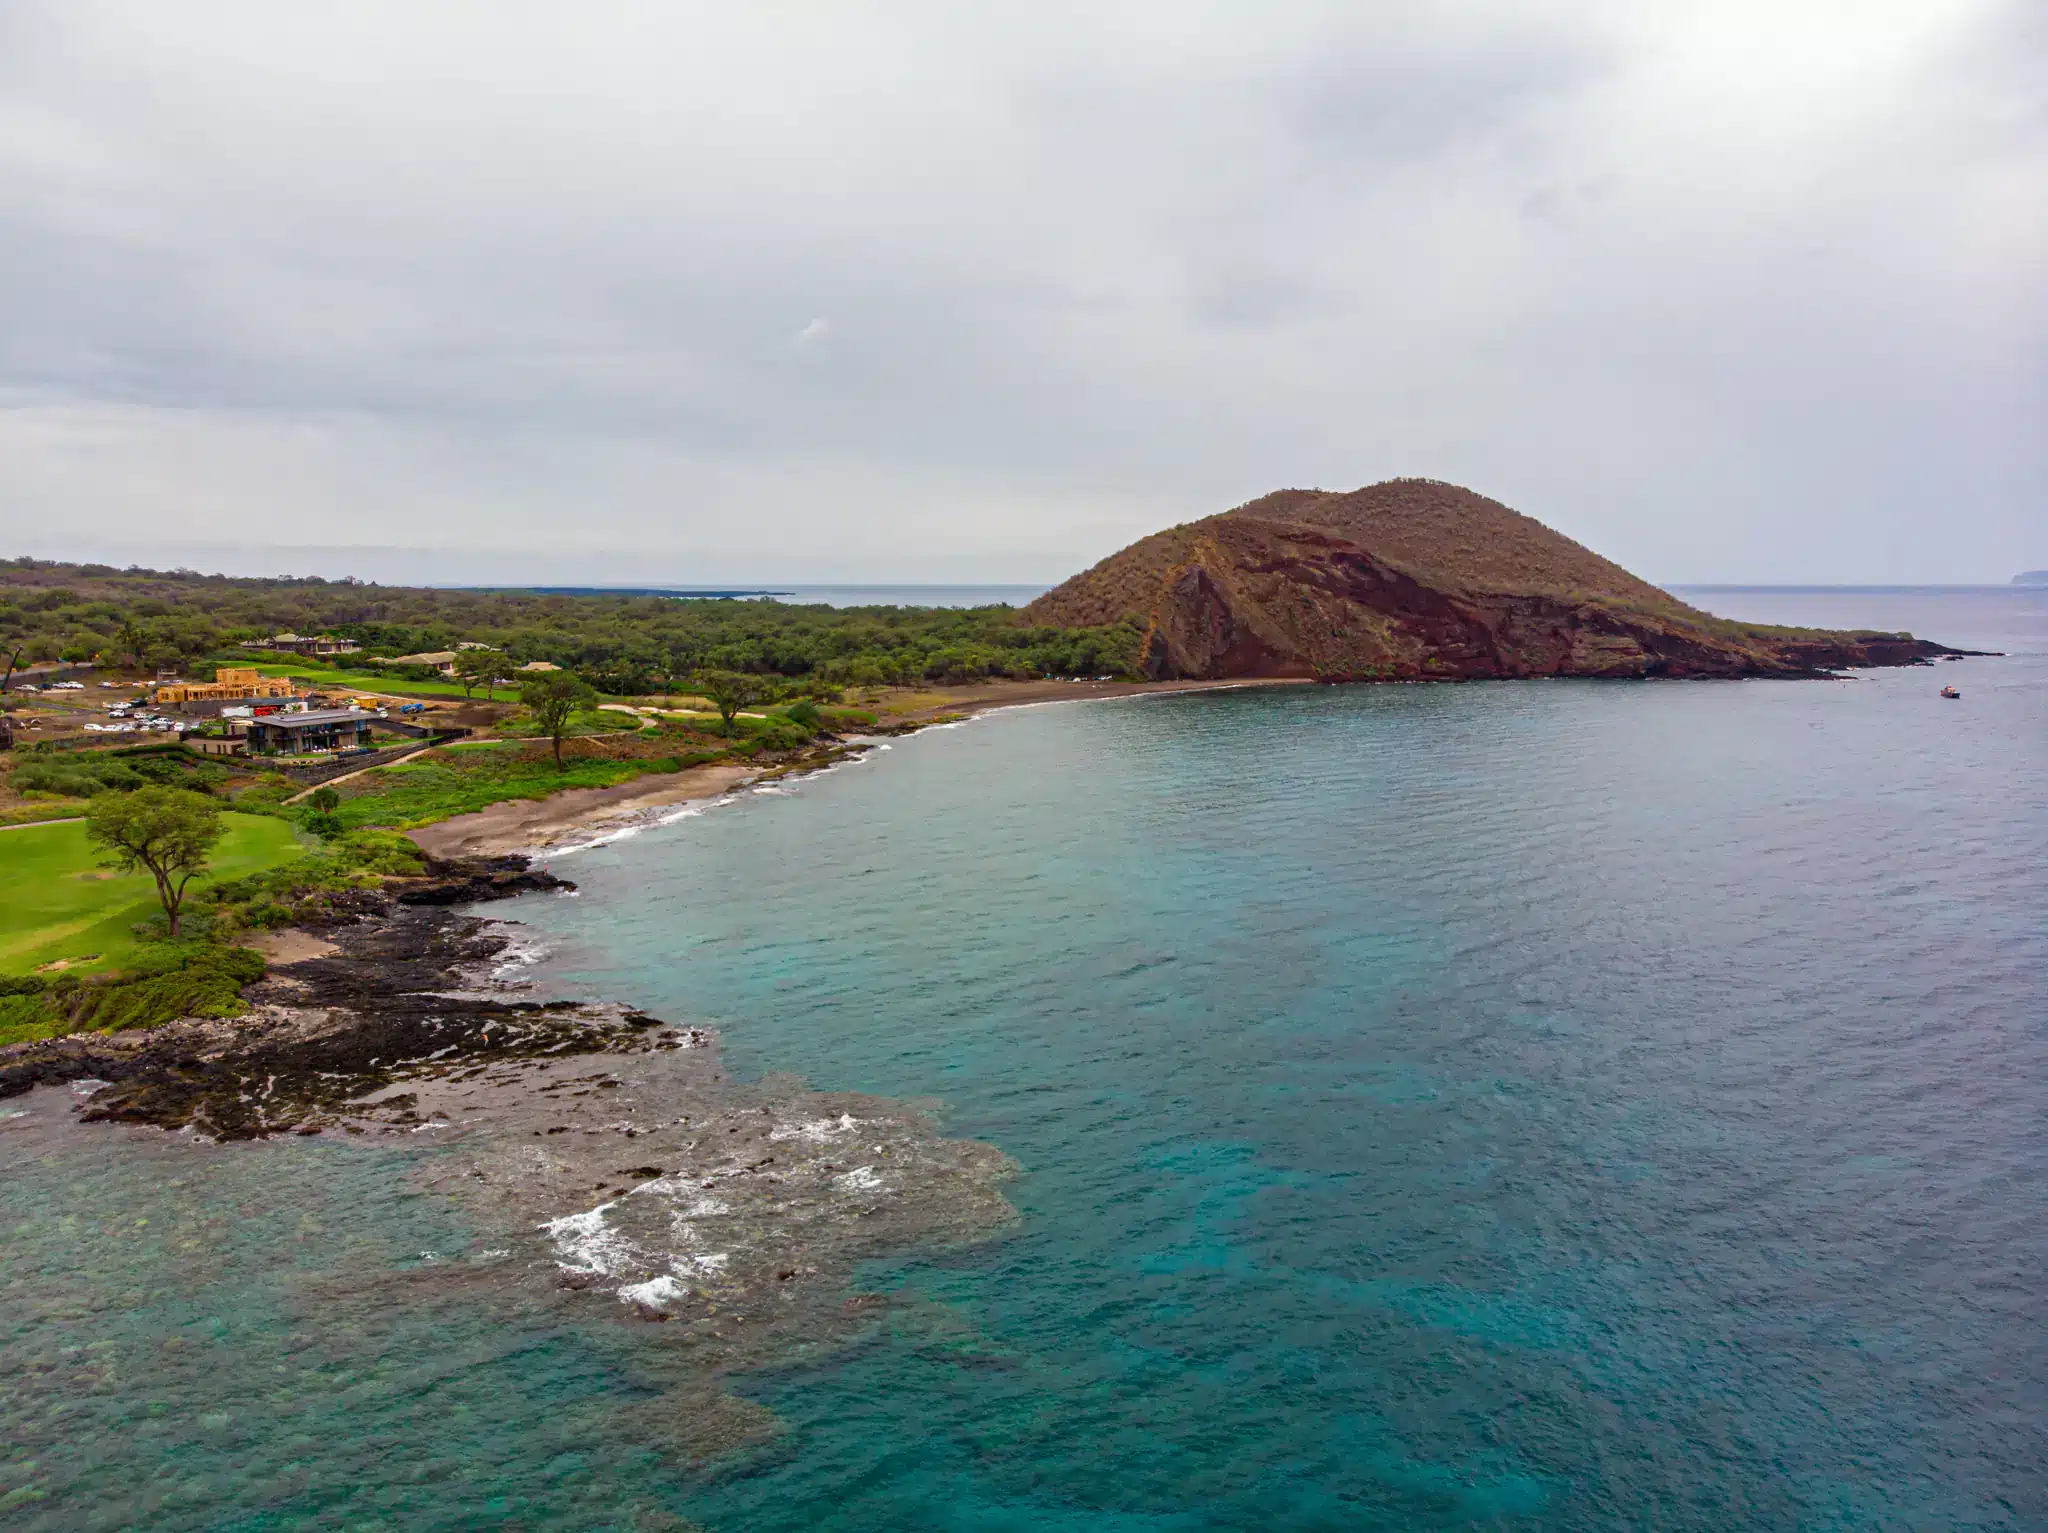 Oneuli Beach is a Beach located in the city of Kihei on Maui, Hawaii